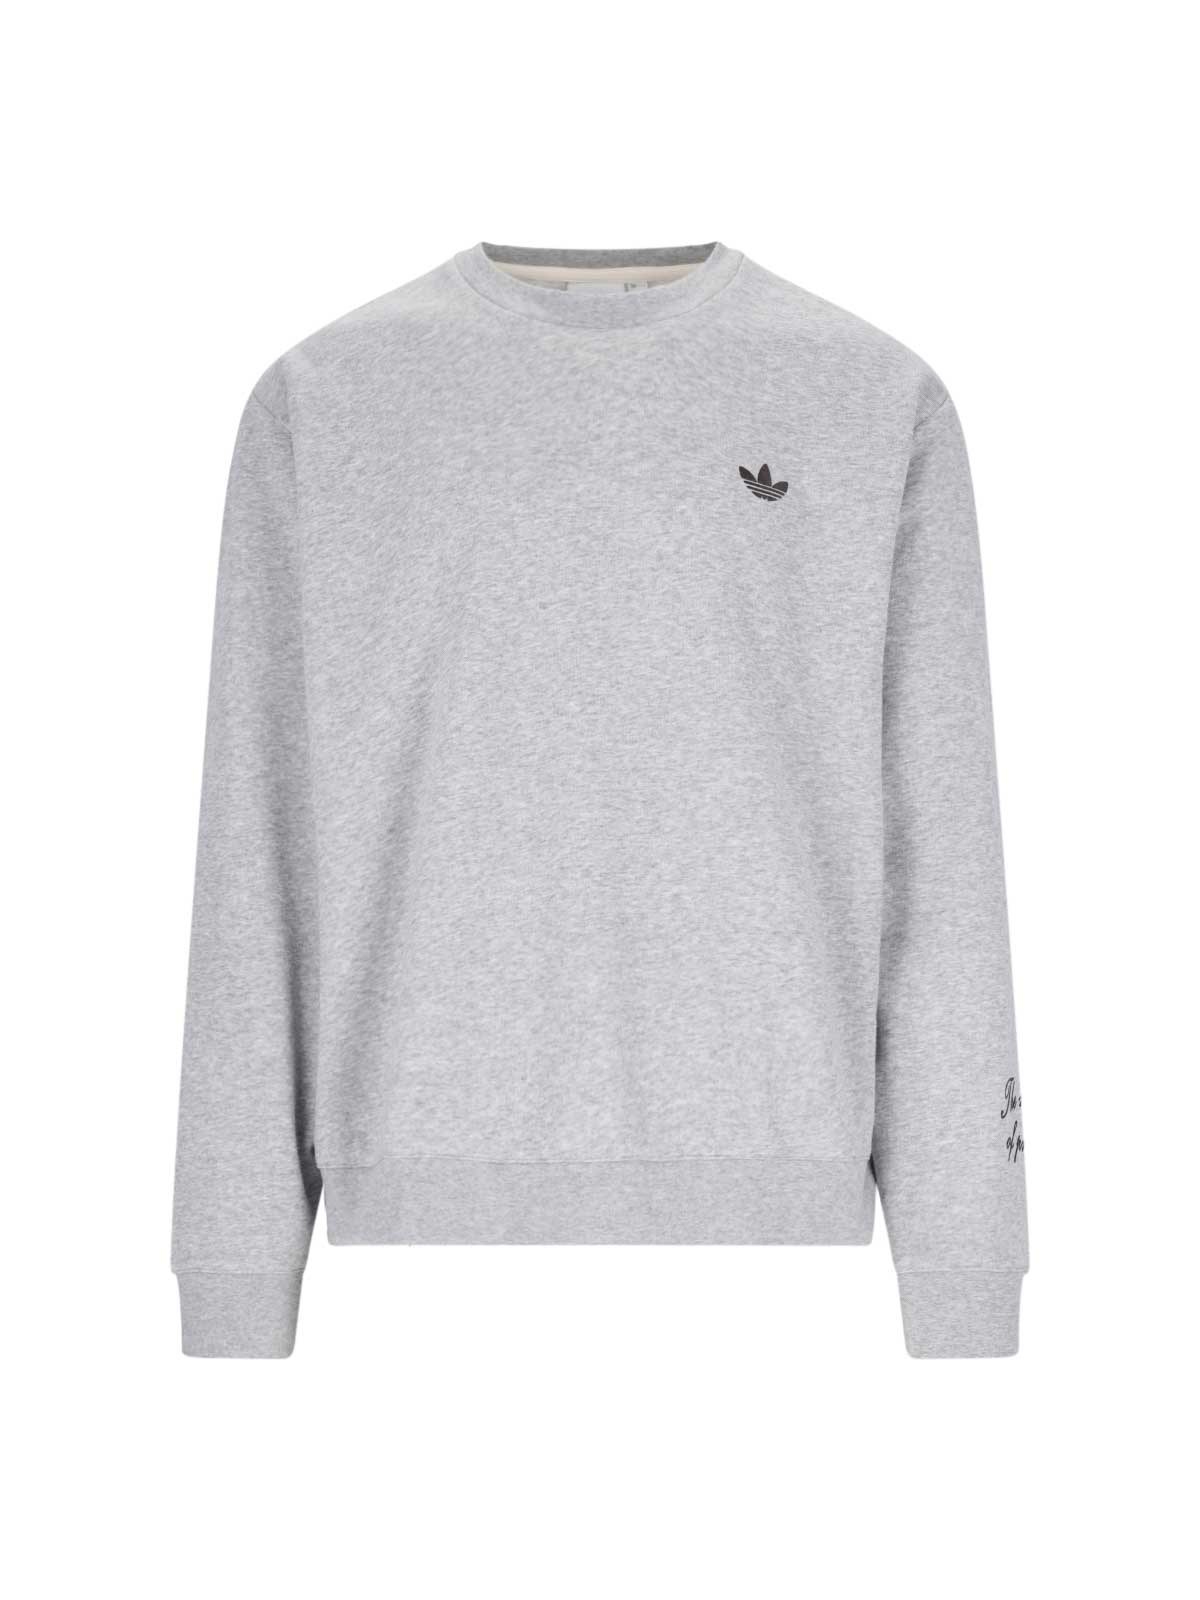 Adidas X Wales Bonner Crewneck Sweatshirt In Gray